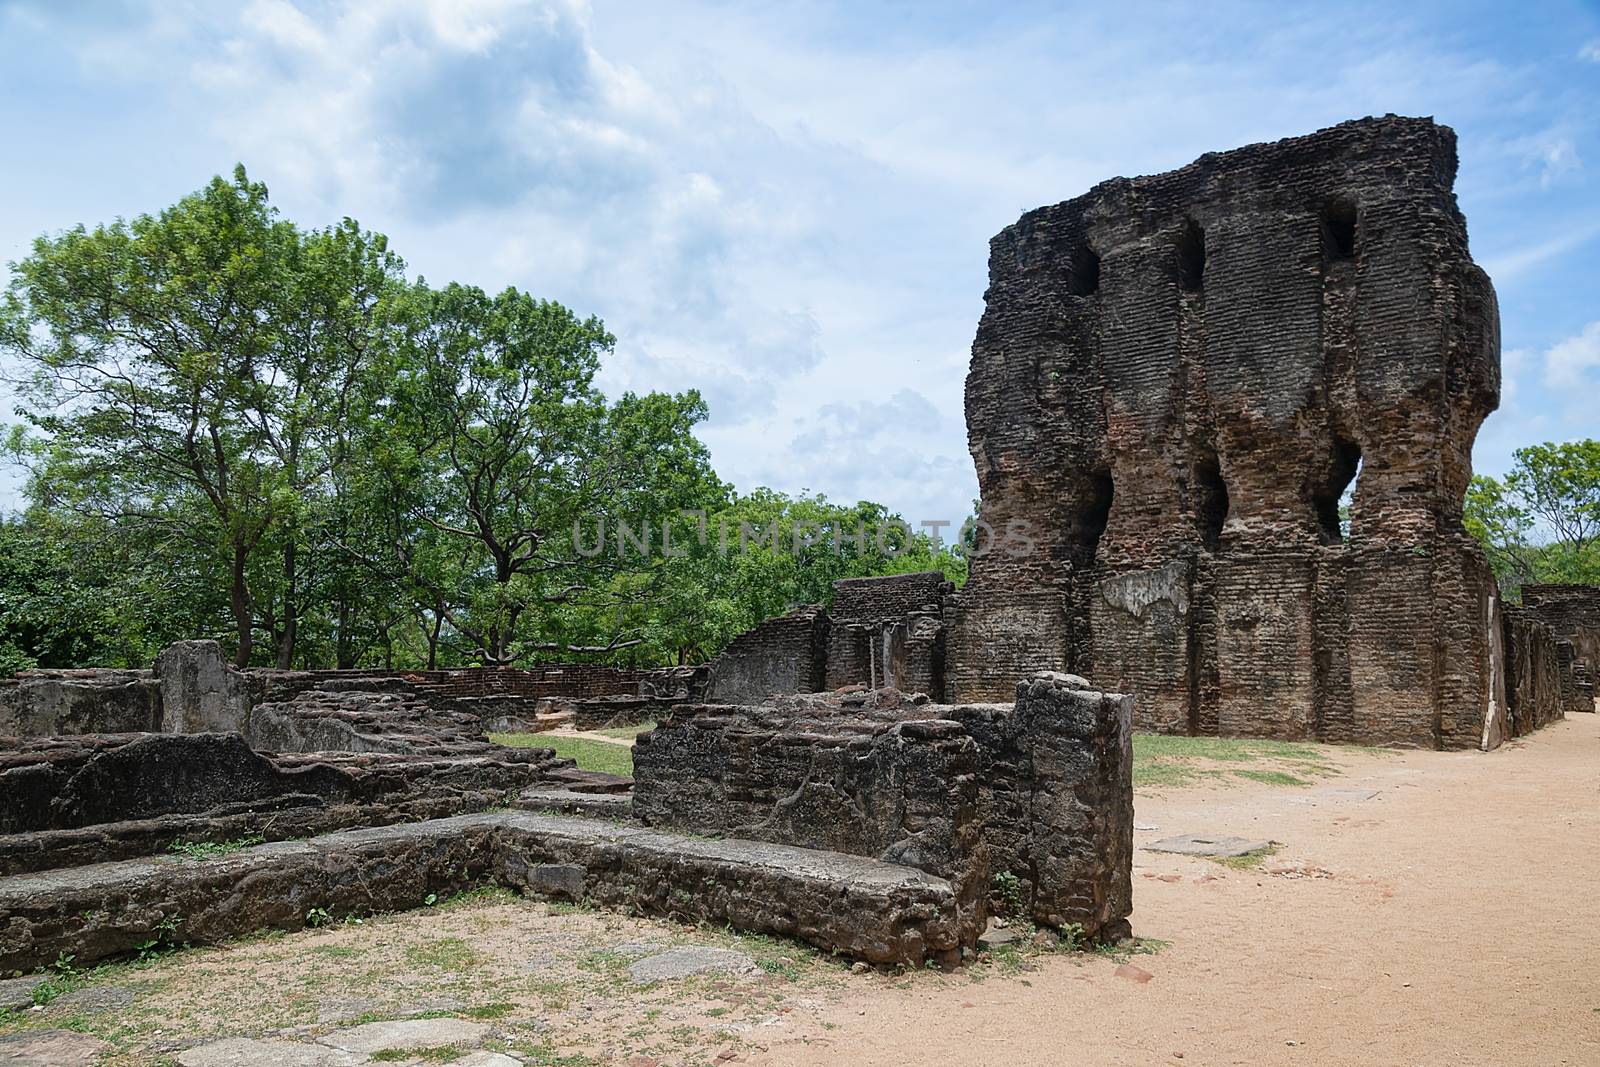 Polonnaruwa, Sri lanka, Sept 2015: Ruins of the Royal Palace